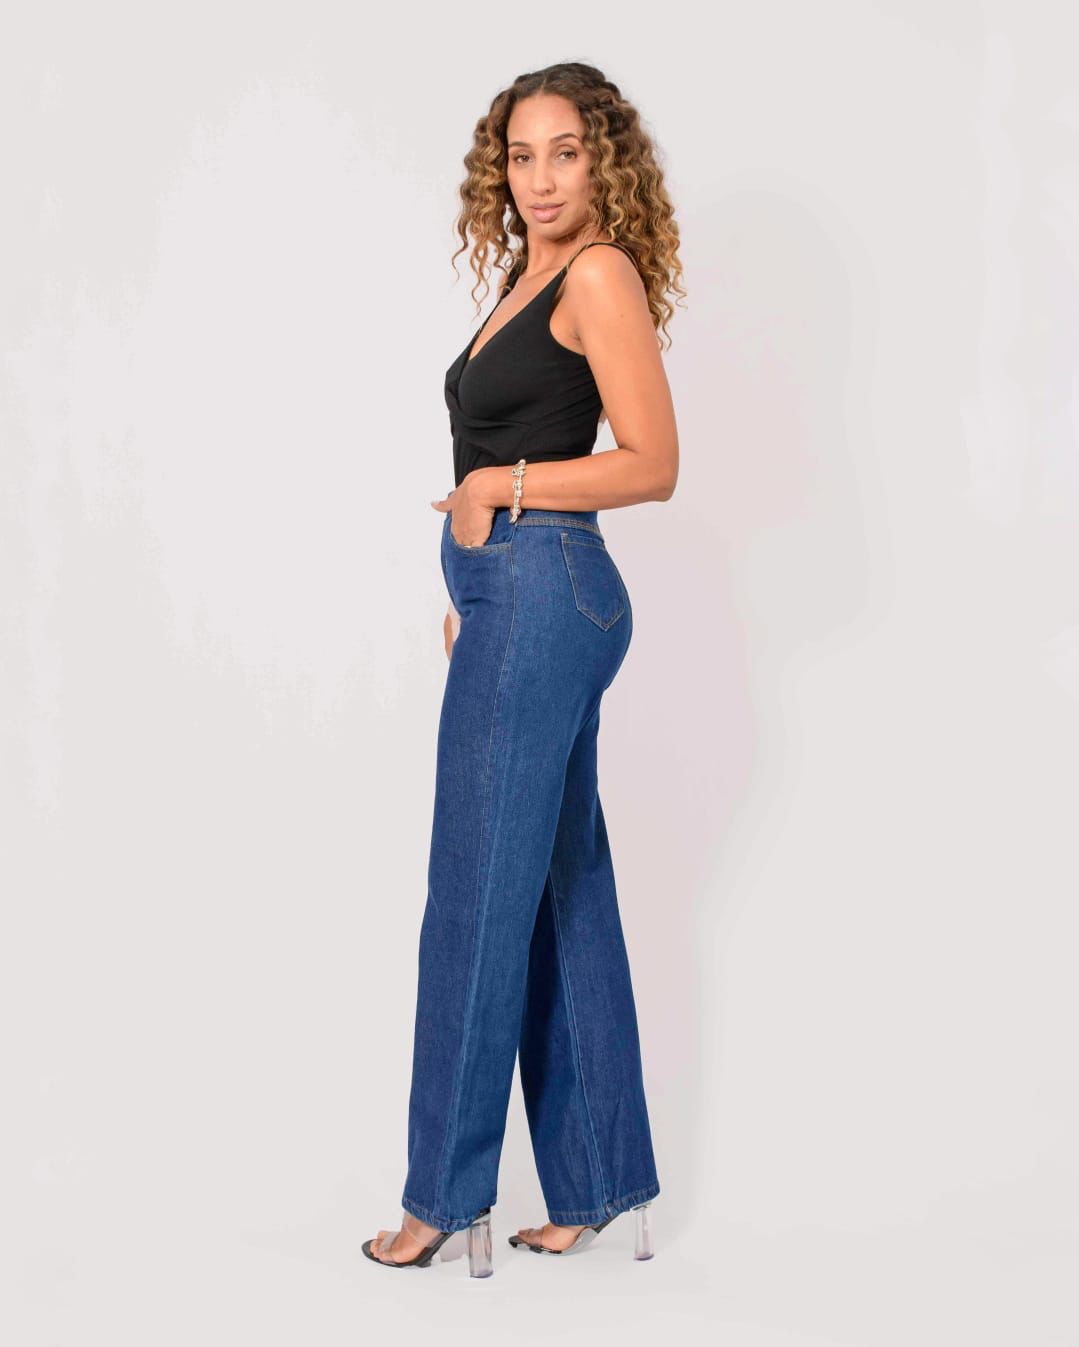 Calça jeans - tamanho 42 - DONATELLA FASHION